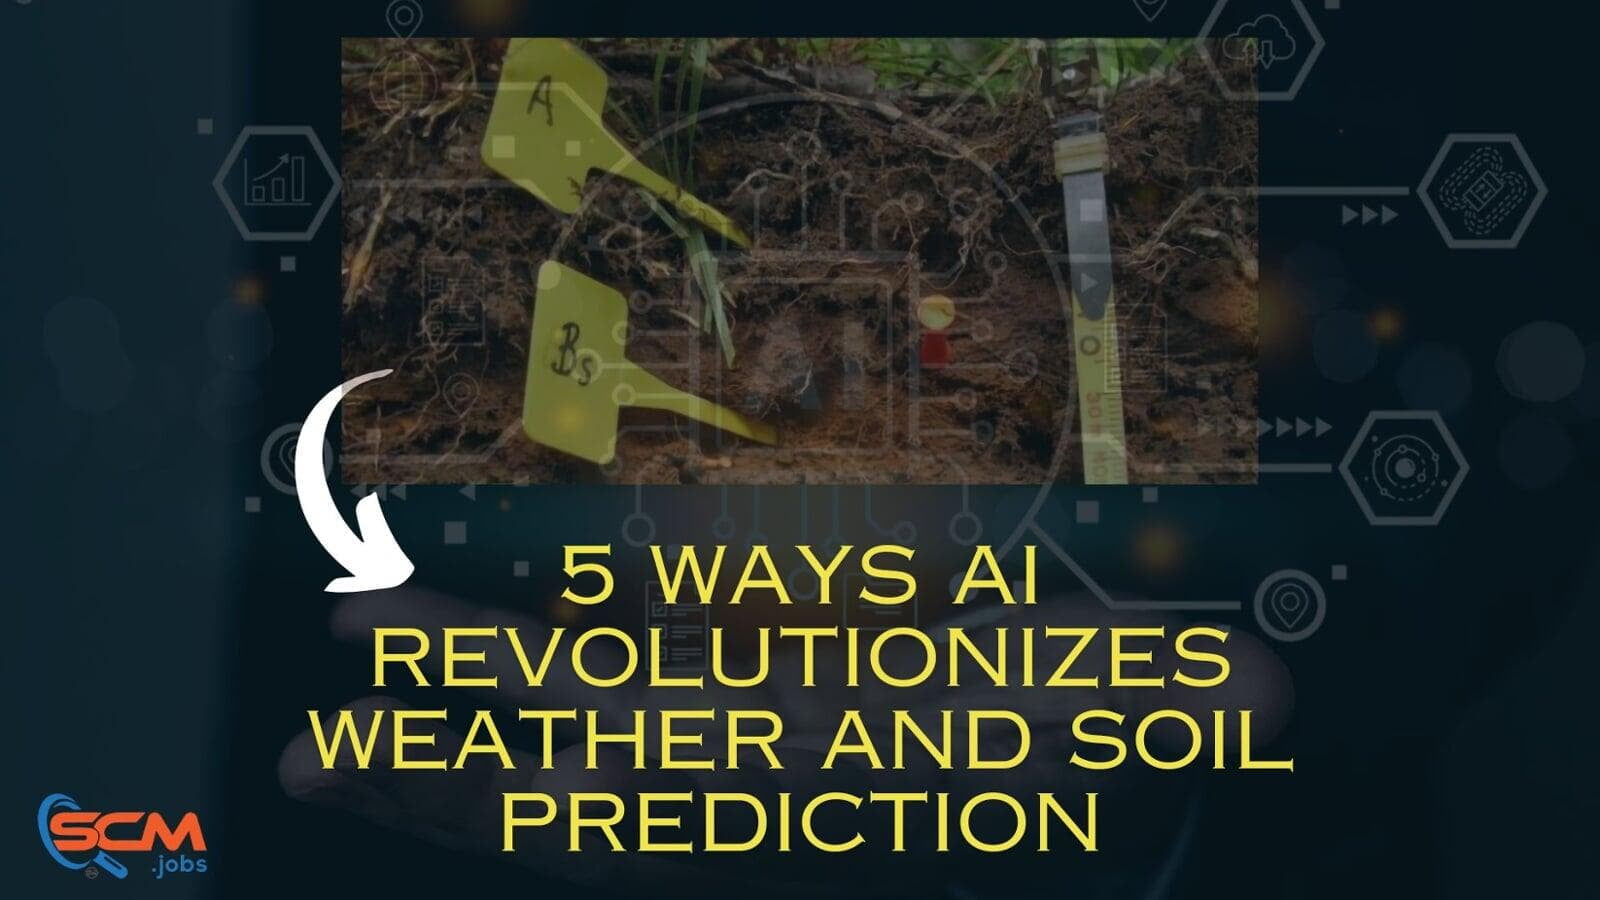 5 Ways AI Revolutionizes Weather and Soil Prediction